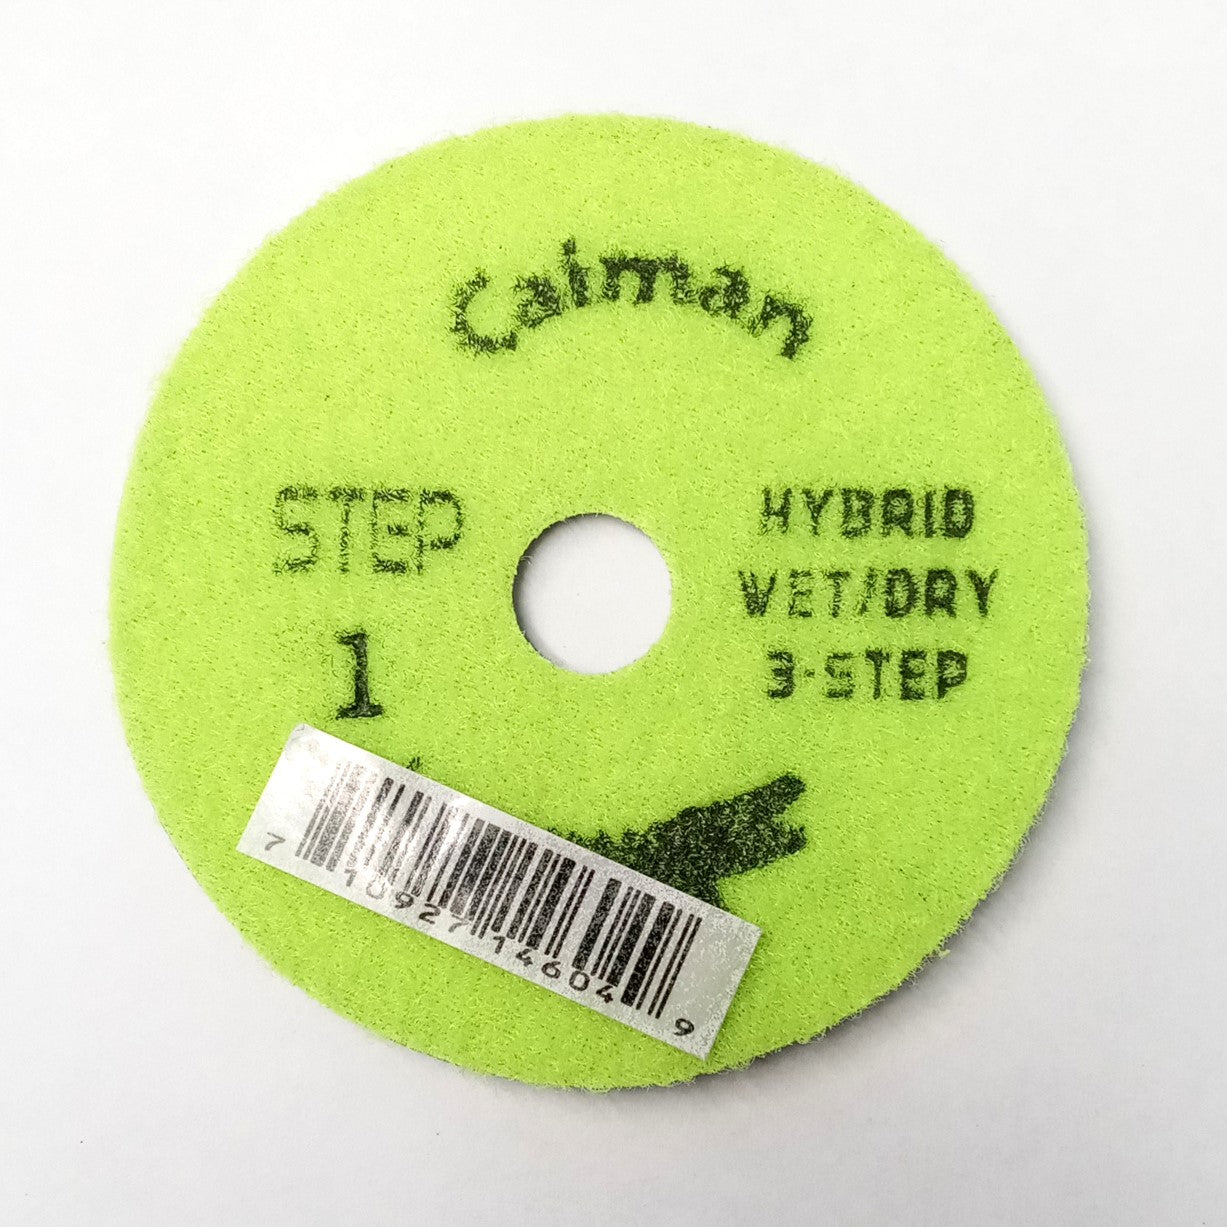 Caiman 14604 4" Wet/Dry Polishing Pad Hybrid 3-Step Step 1 Lime